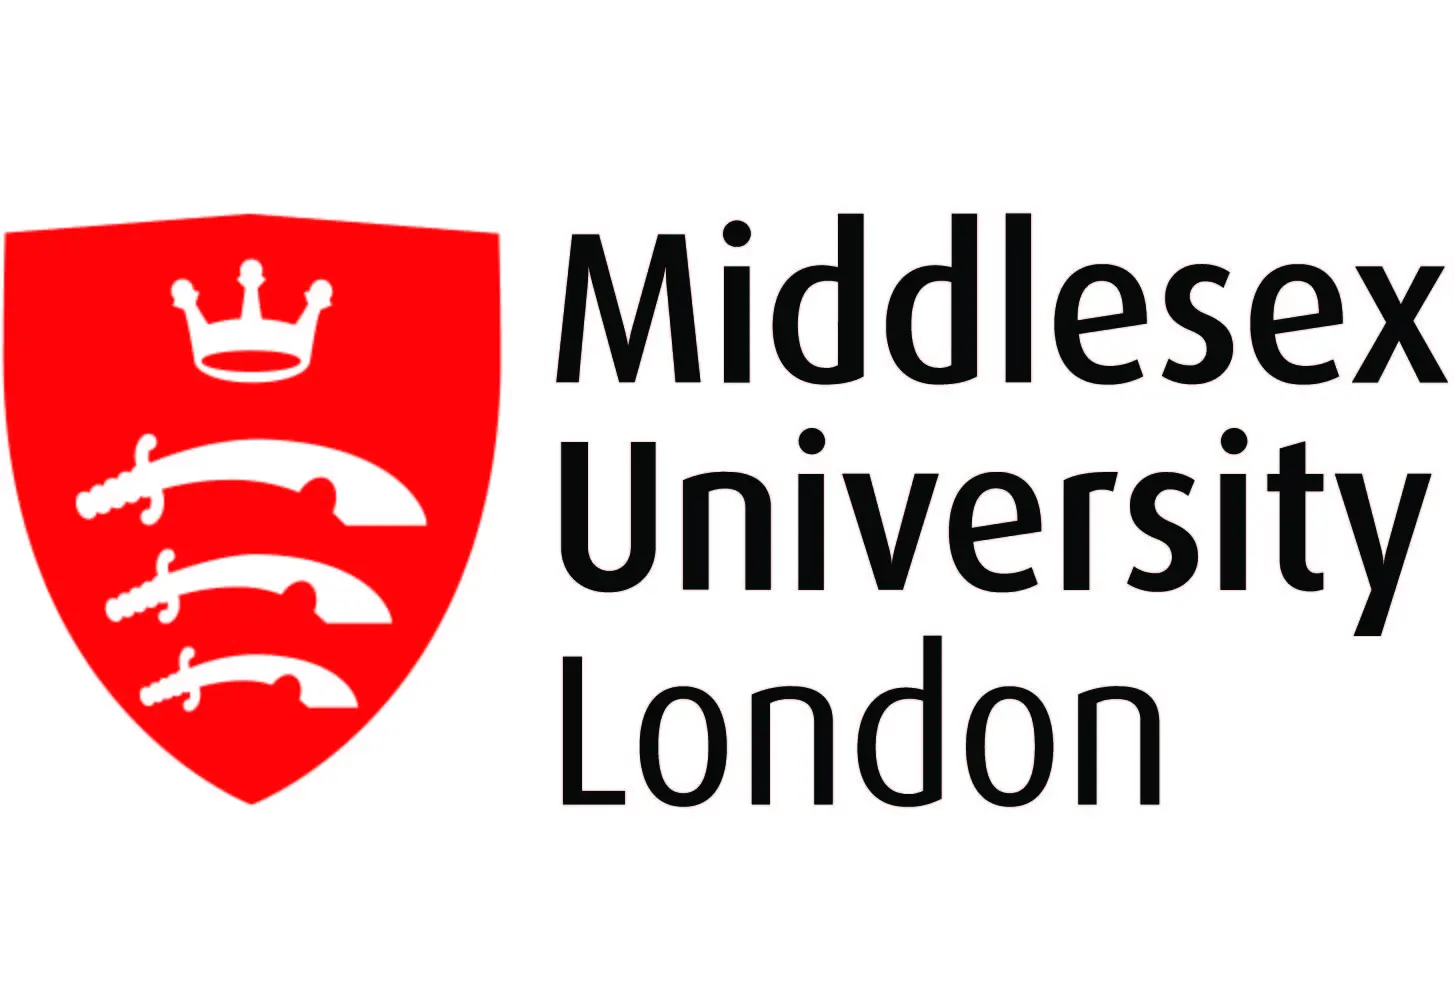 middlesex-university-london